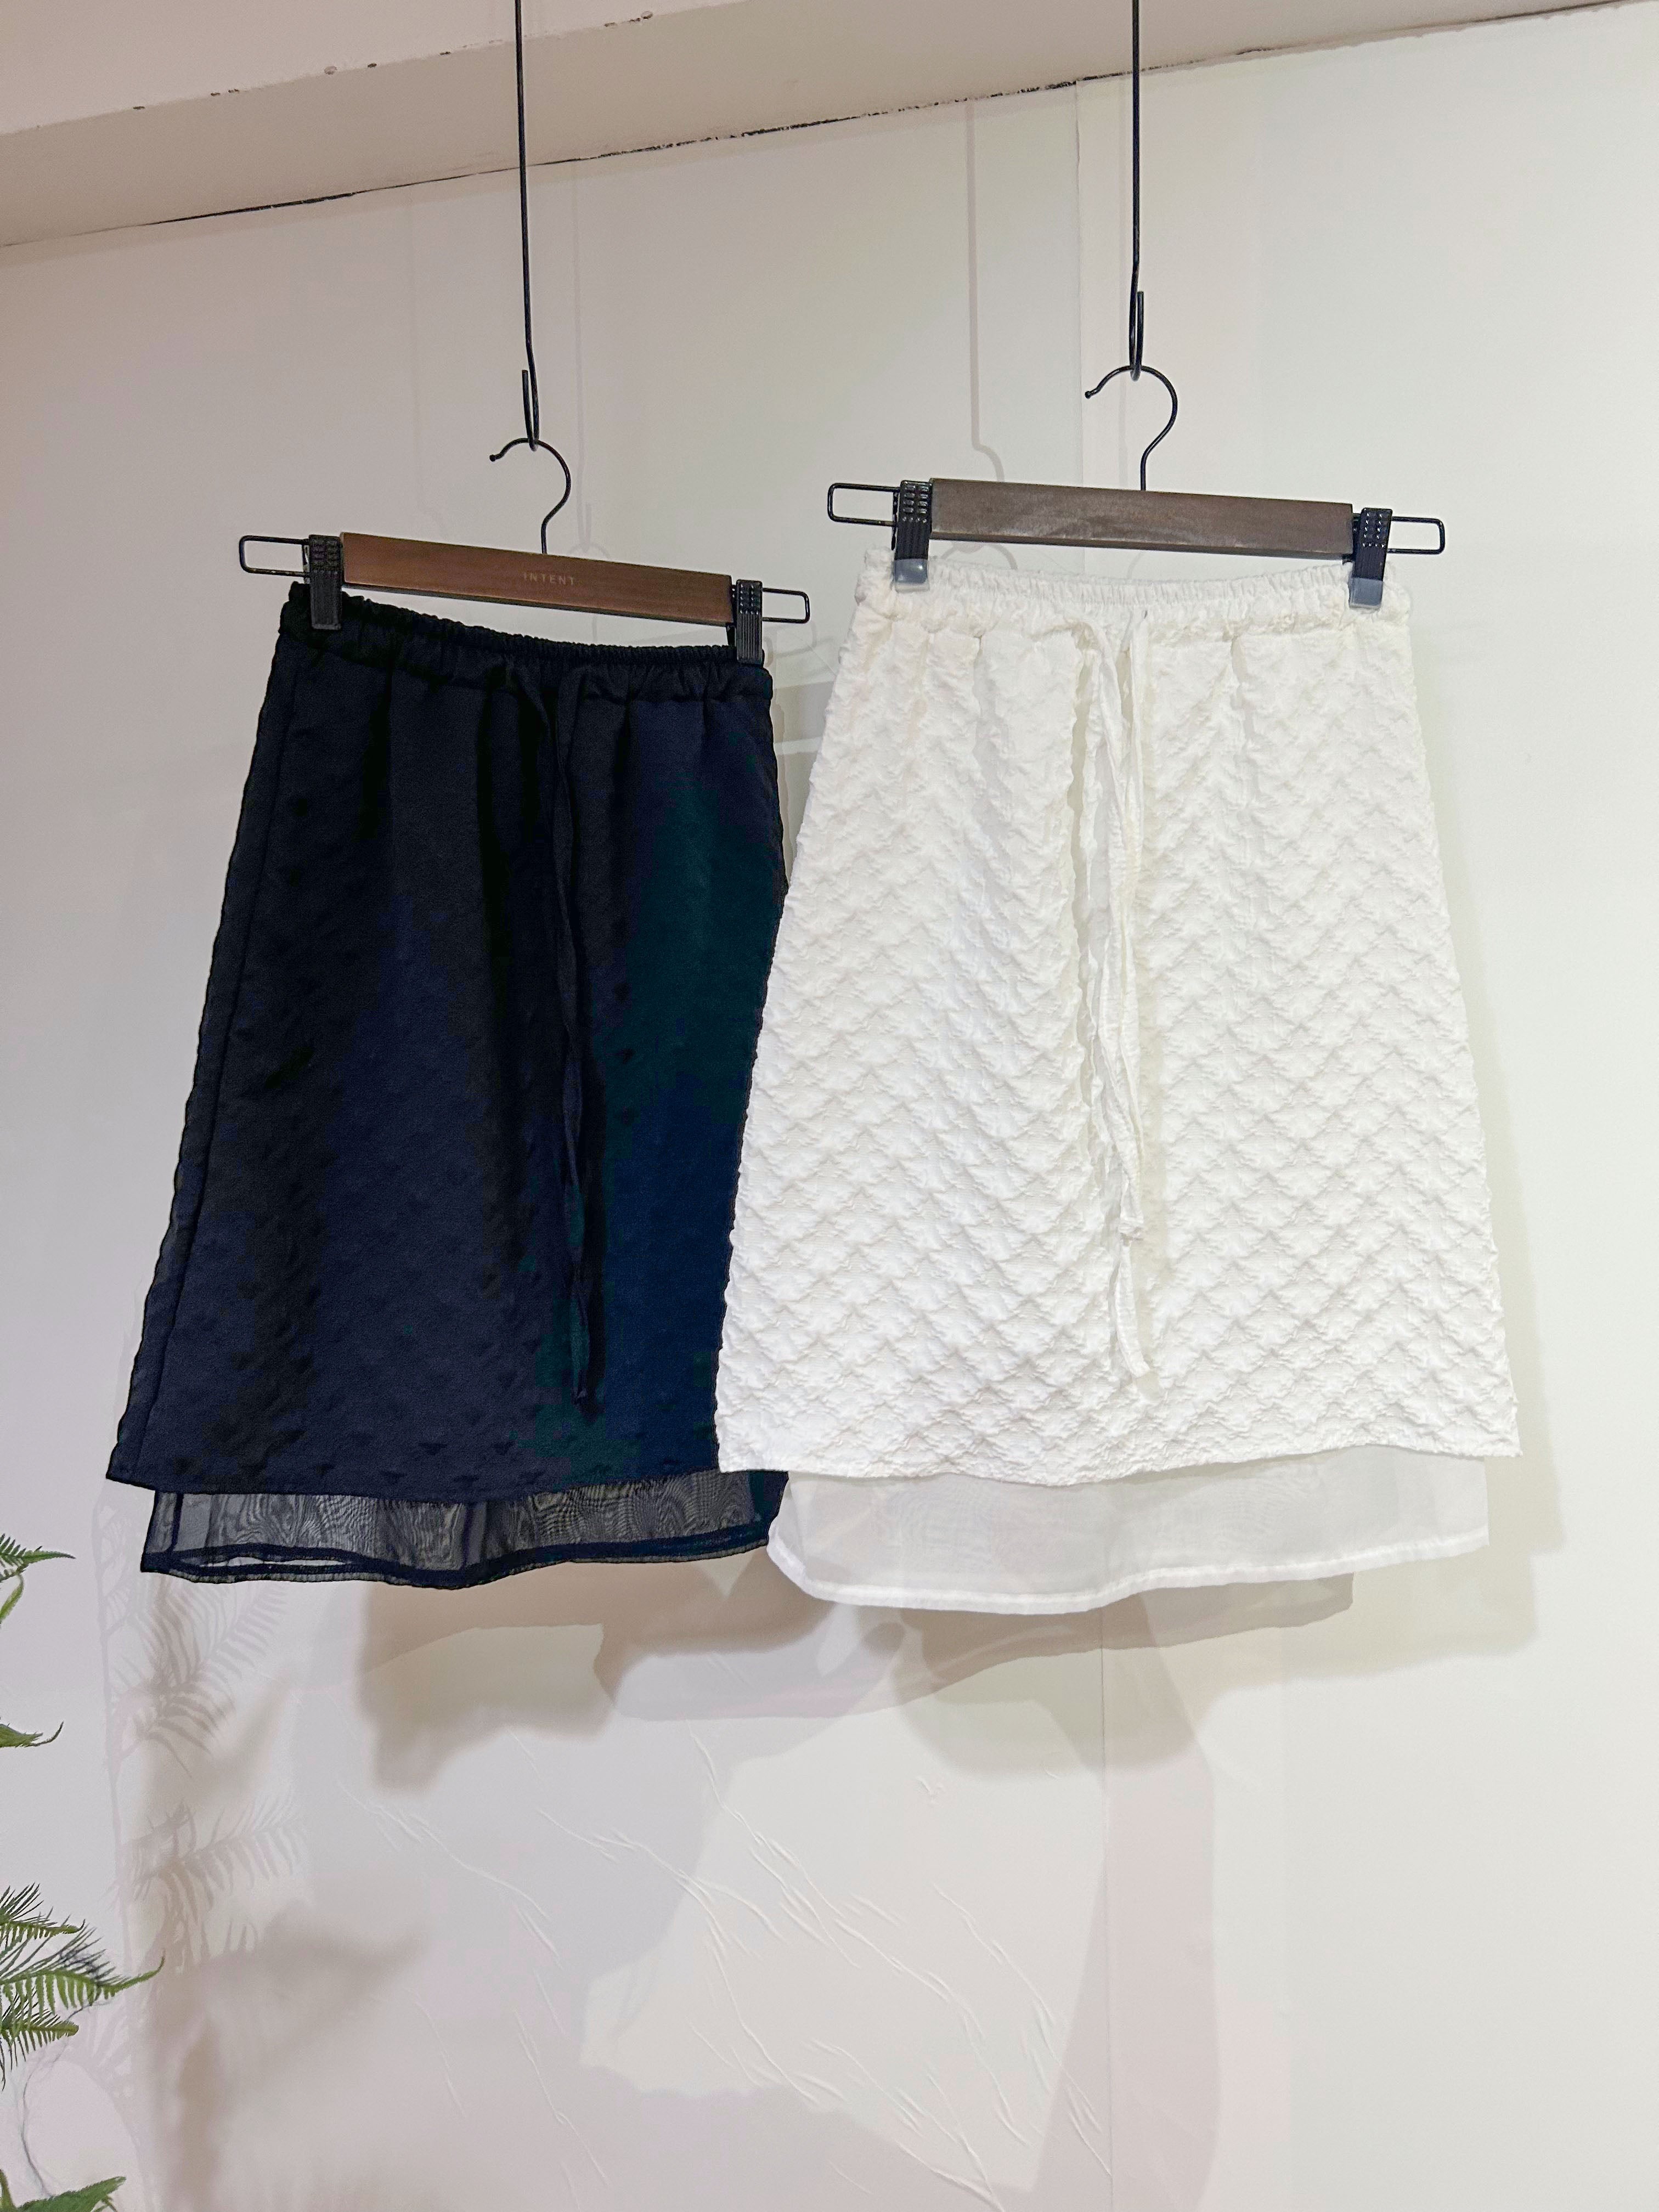 Pattern 全橡筋立體花雙層微A形裙, Skirt/ SK8803 (white sold out)